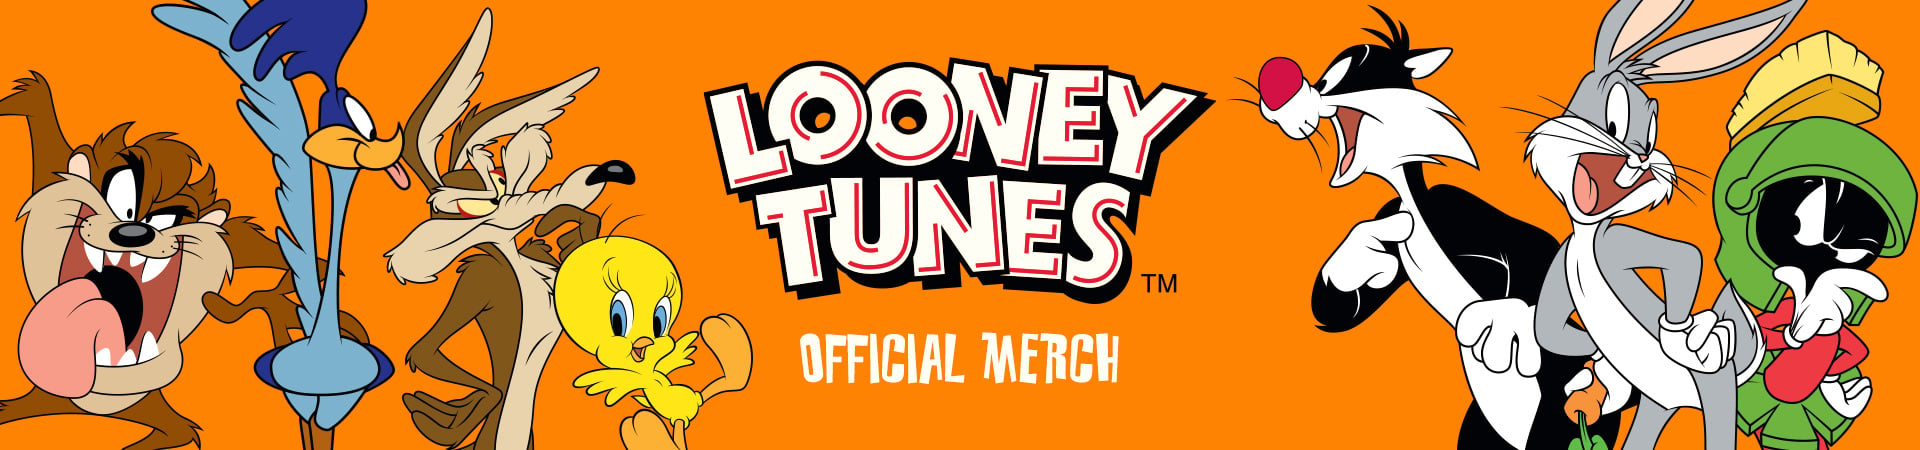 Looney Tunes - Official Merchandise